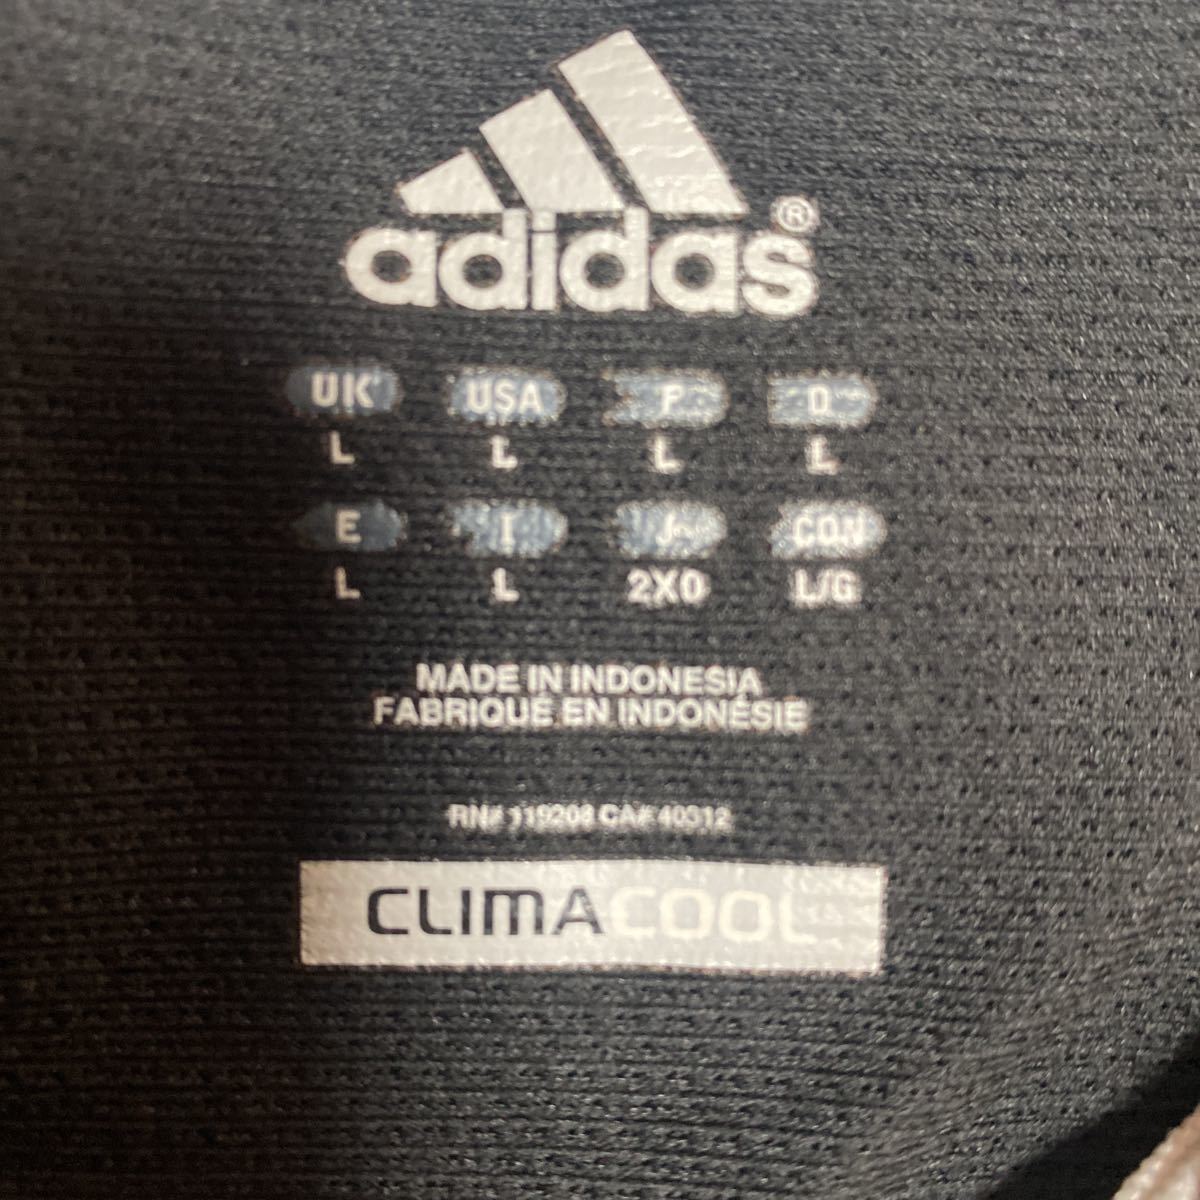 k14 adidas длинный рукав спорт рубашка размер 2xo надпись Indonesia производства 